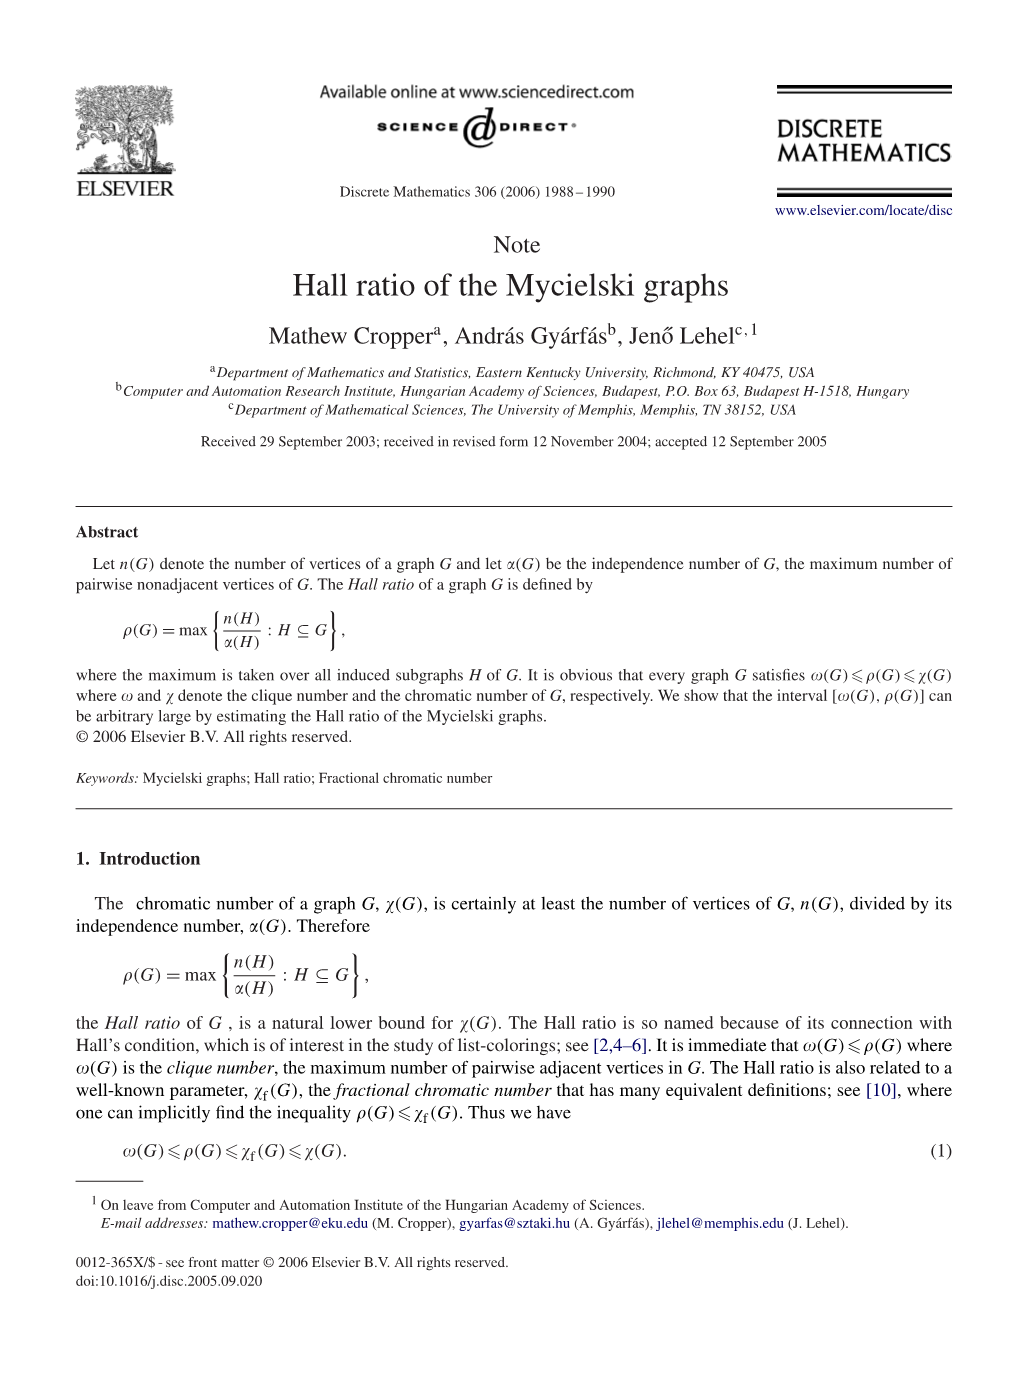 Hall Ratio of the Mycielski Graphs Mathew Croppera, András Gyárfásb, Jeno˝ Lehelc,1